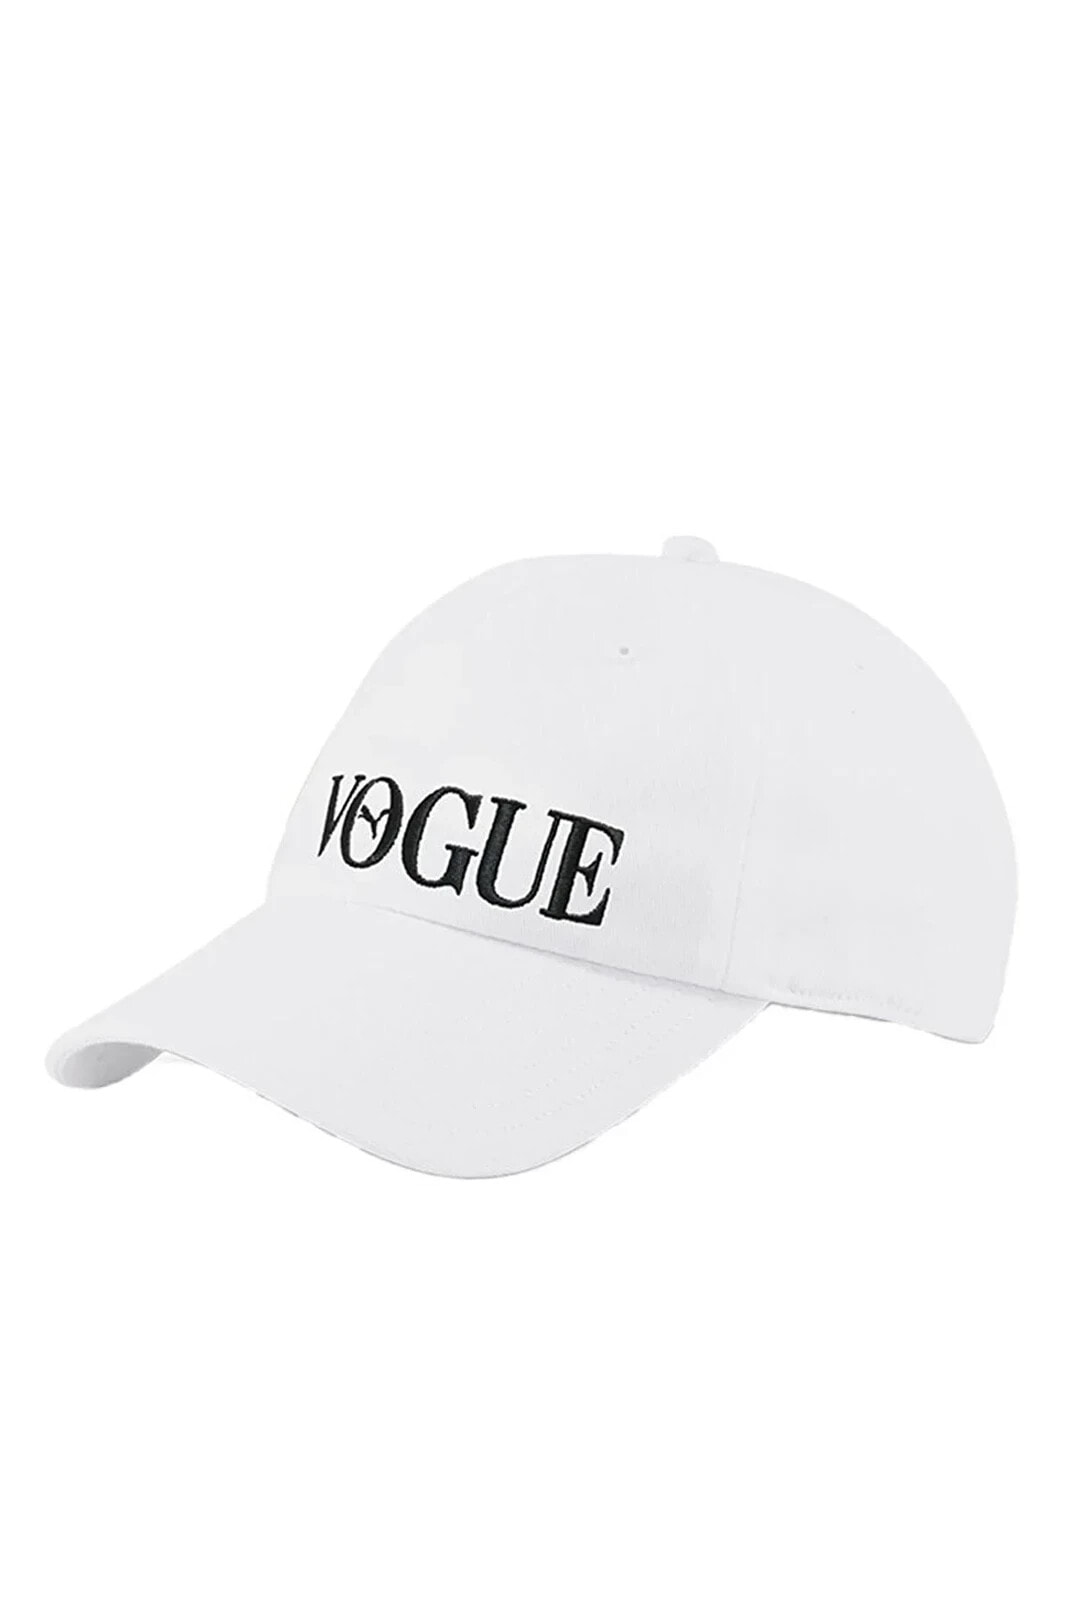 X Vogue Baseball